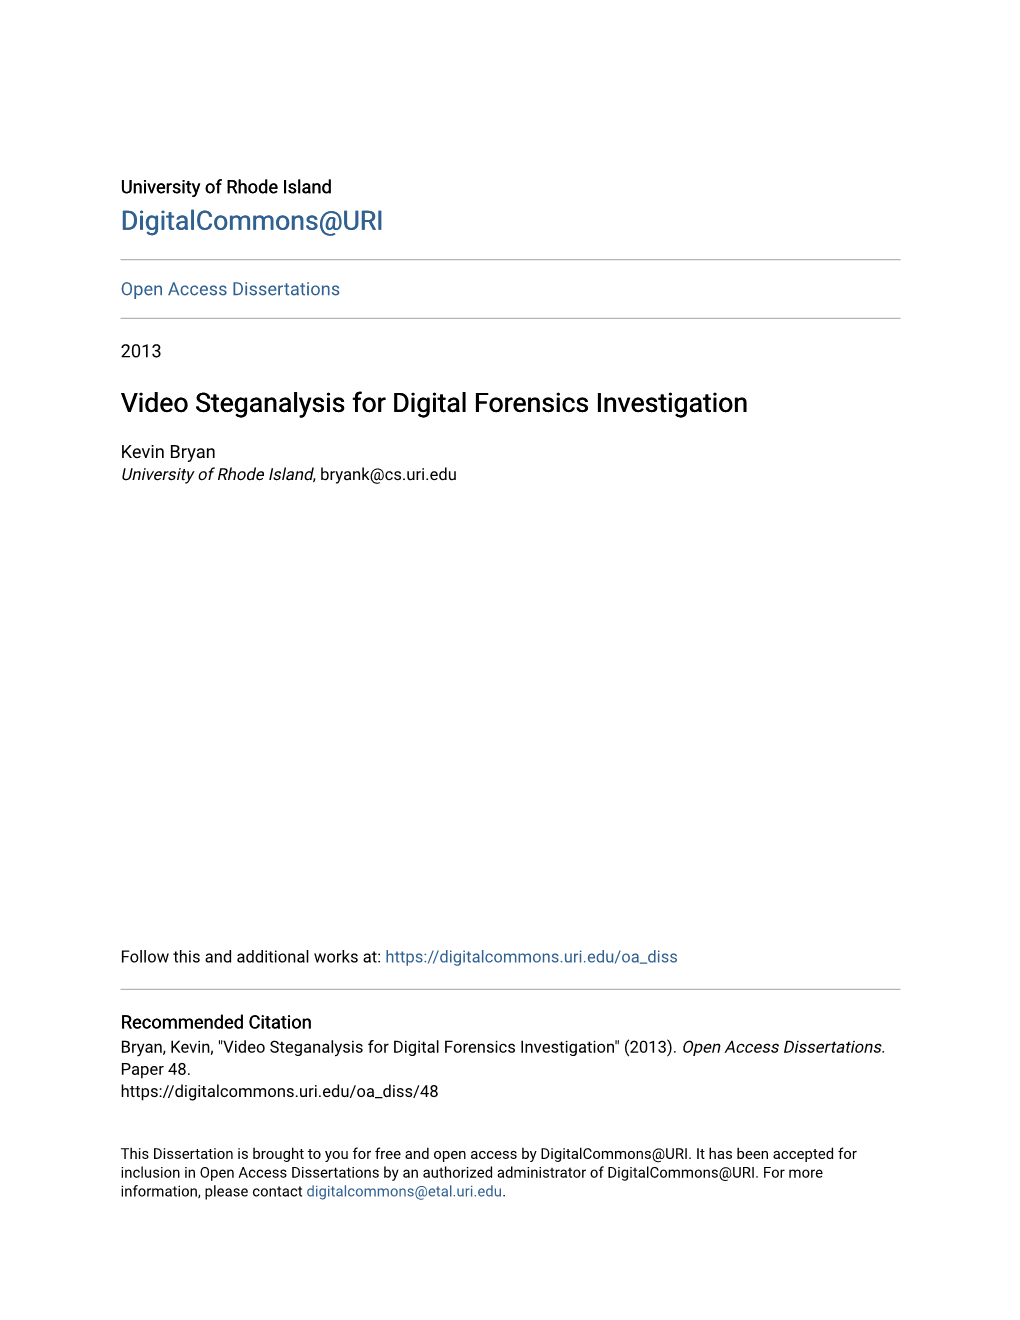 Video Steganalysis for Digital Forensics Investigation